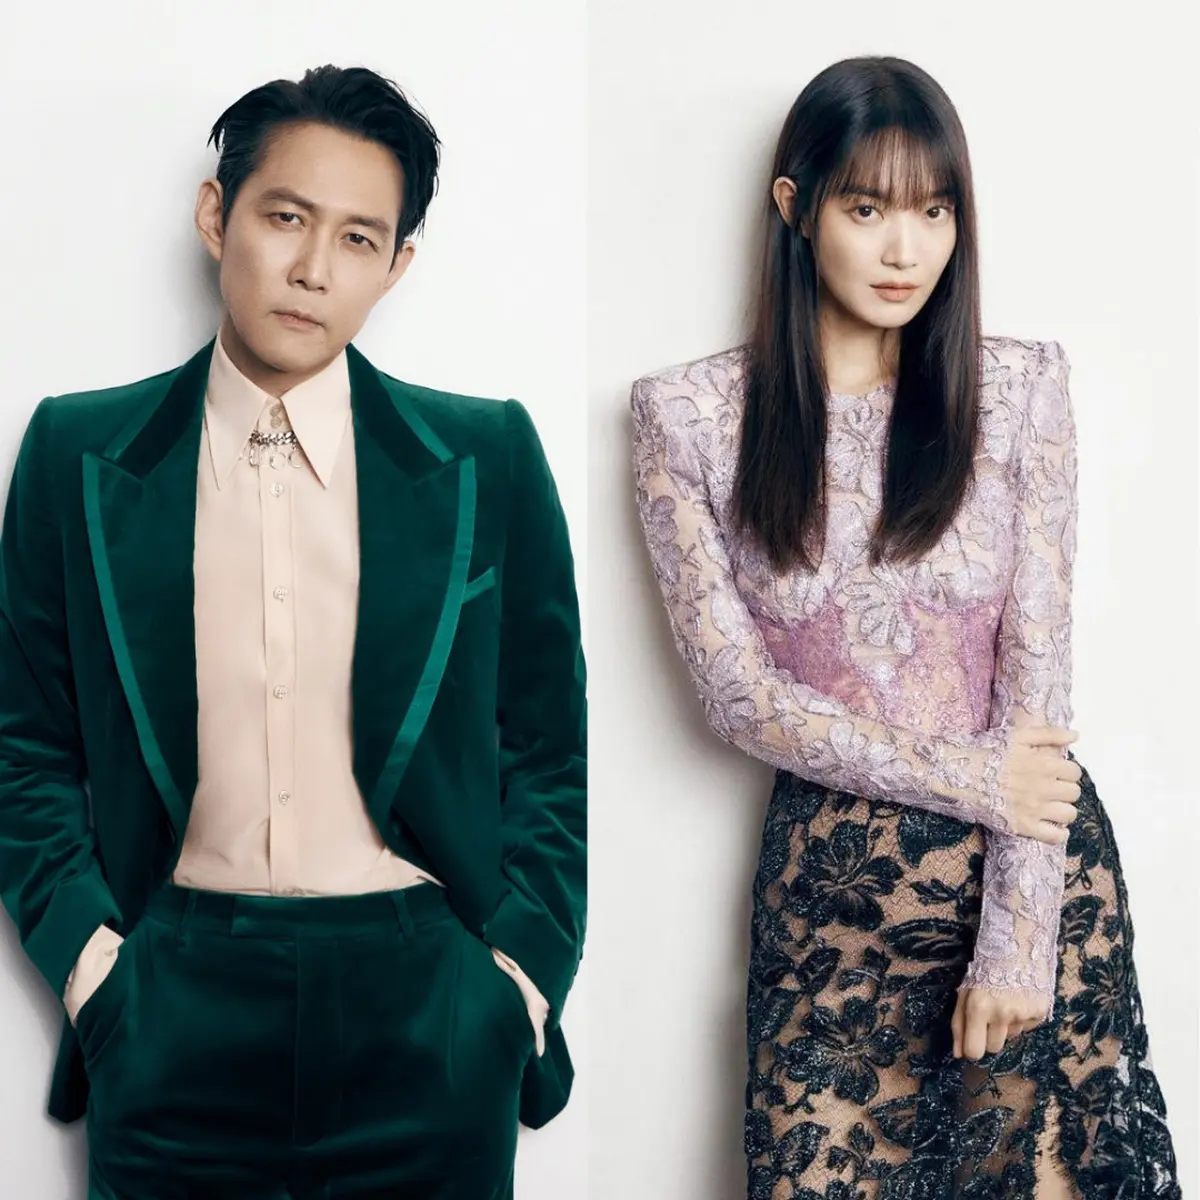 Shin Min-a and Lee Jung-jae become Gucci's new global ambassadors